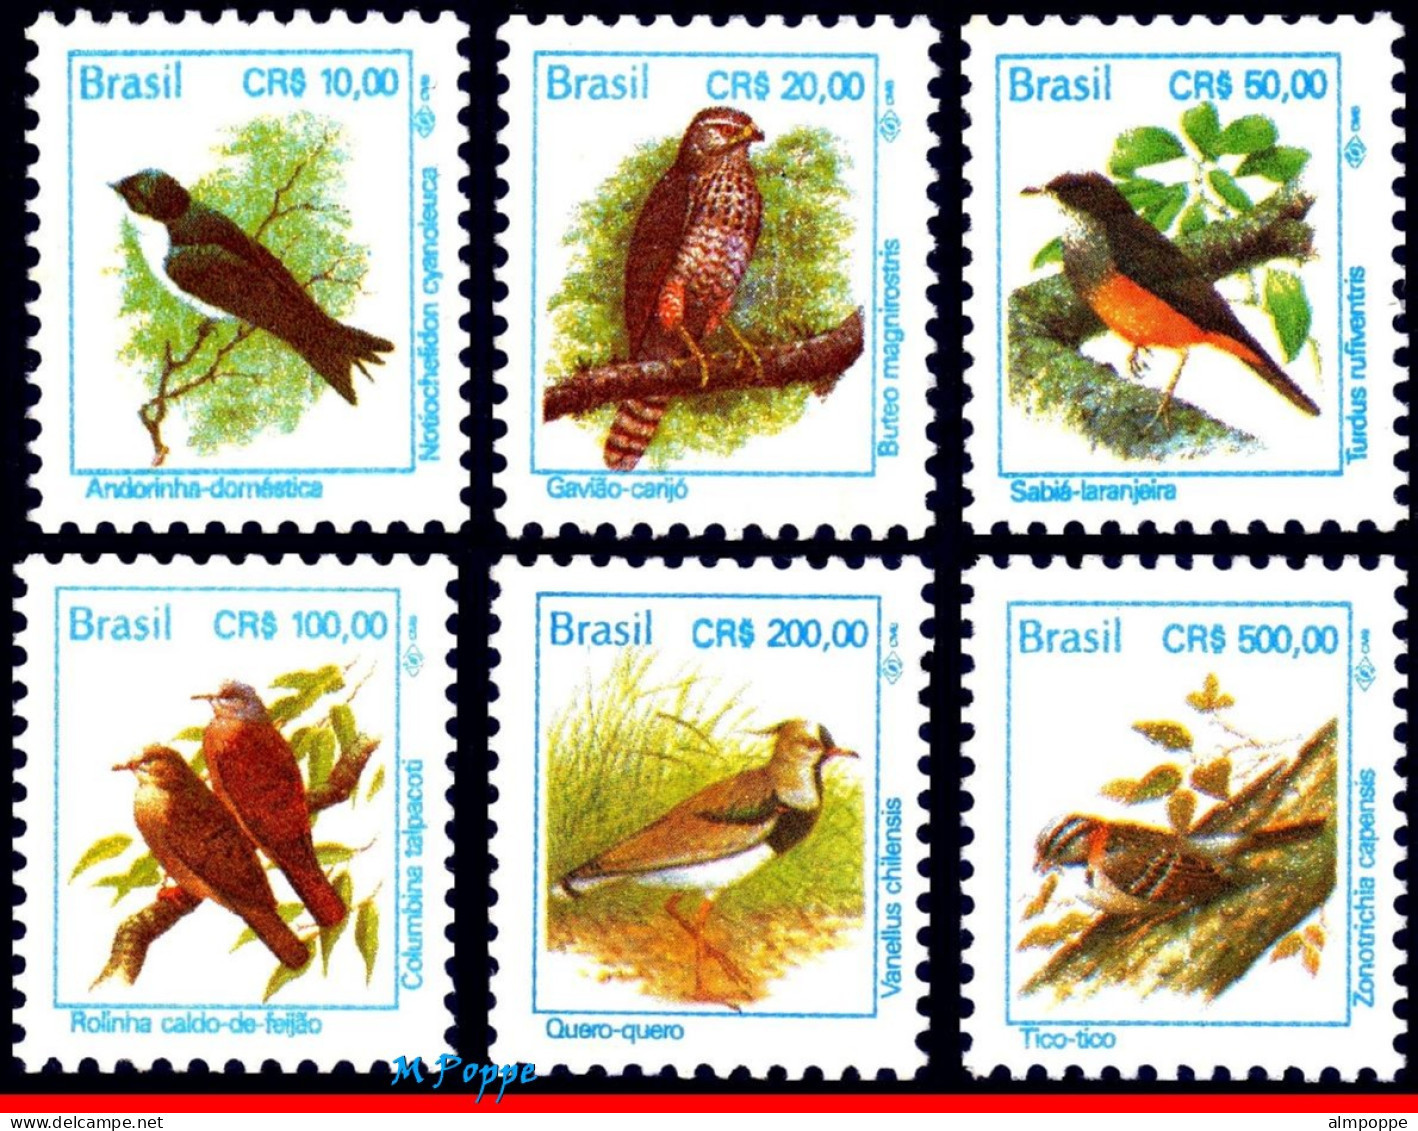 Ref. BR-2443-48 BRAZIL 1994 - ANIMALS & FAUNA, CR$,DEFINITIVE, MI# 2569-2583, SET MNH, BIRDS 6V Sc# 2443-2448 - Nuevos